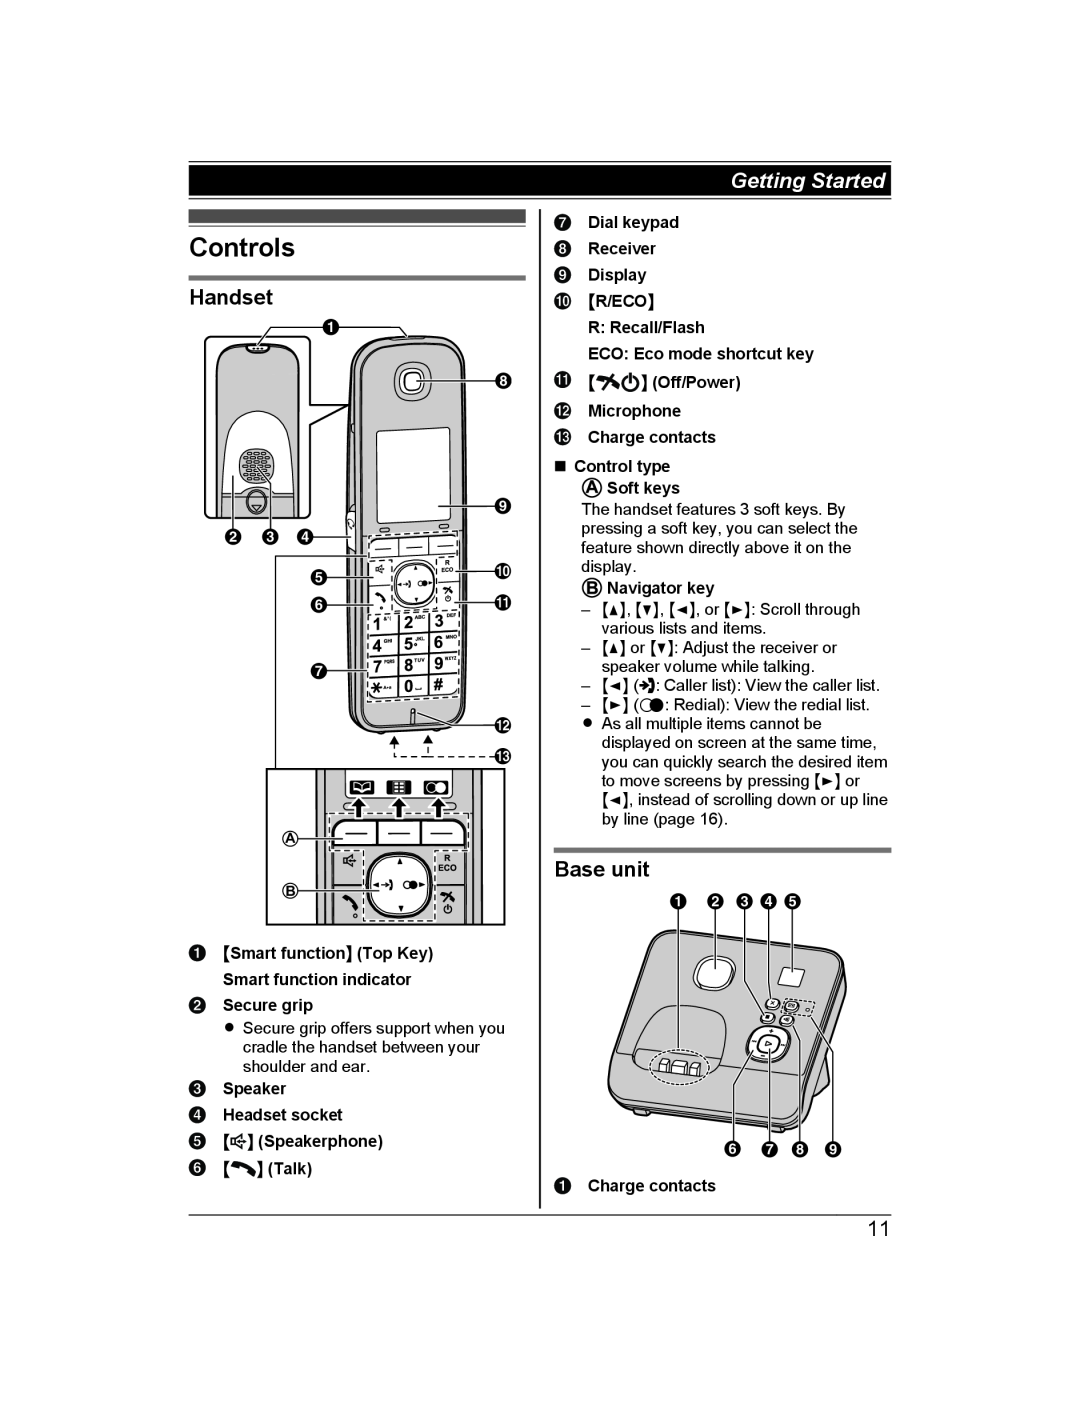 Panasonic KX-TG8162AL, KX-TG8163AL operating instructions Controls, Handset, Base unit, Getting Started 